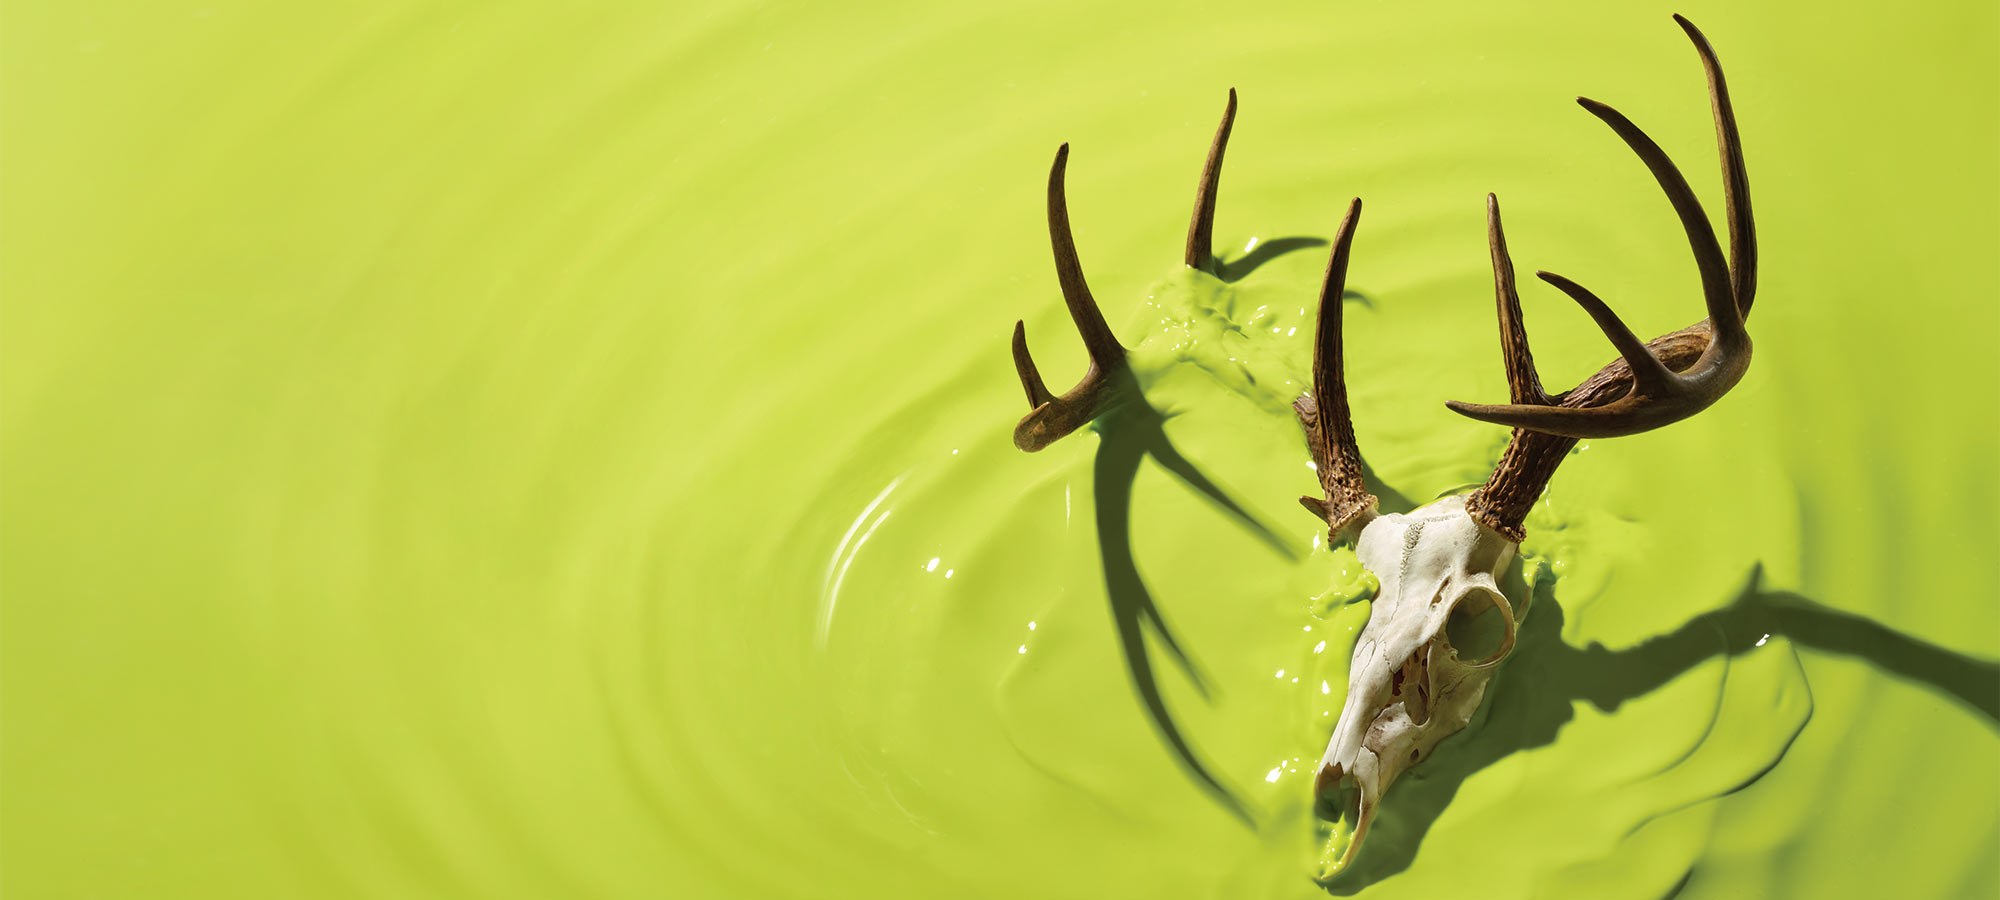 deer skull and antlers in green liquid